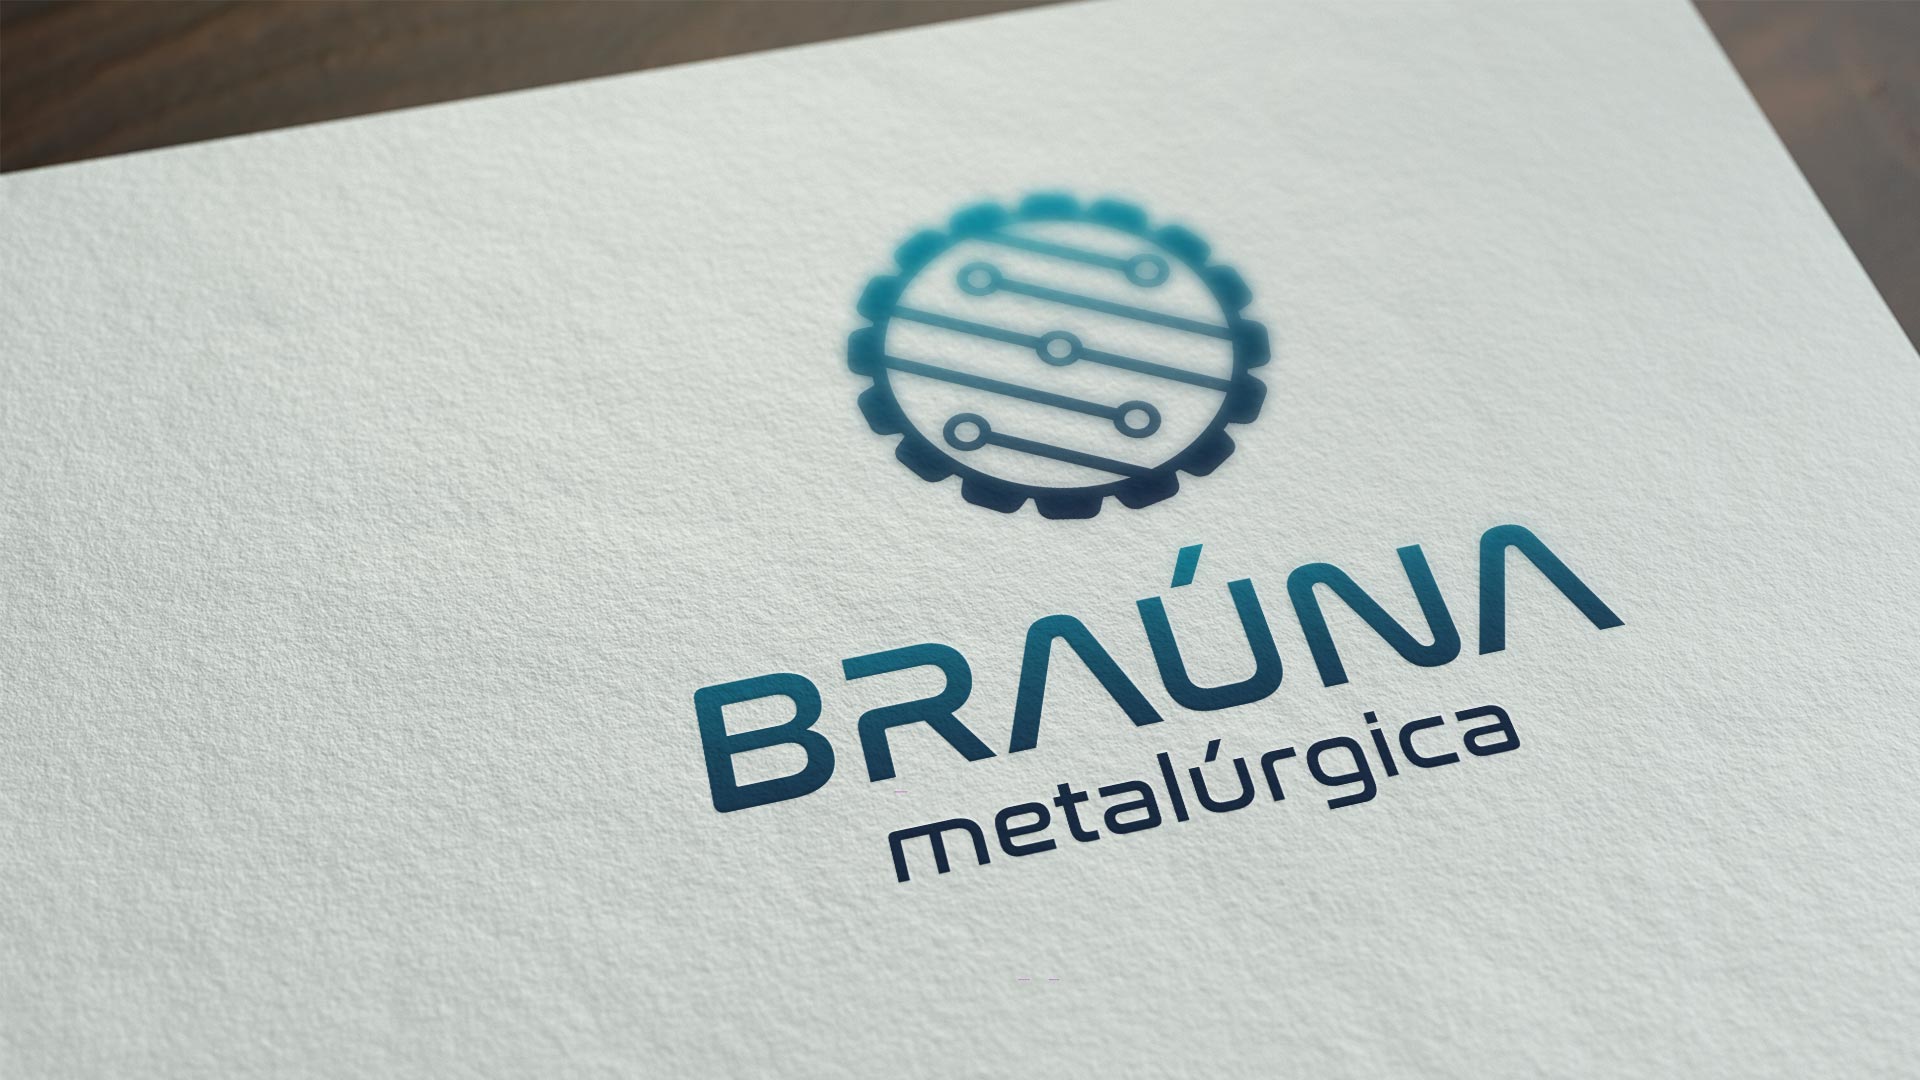 Logo Brauna Metalurgica